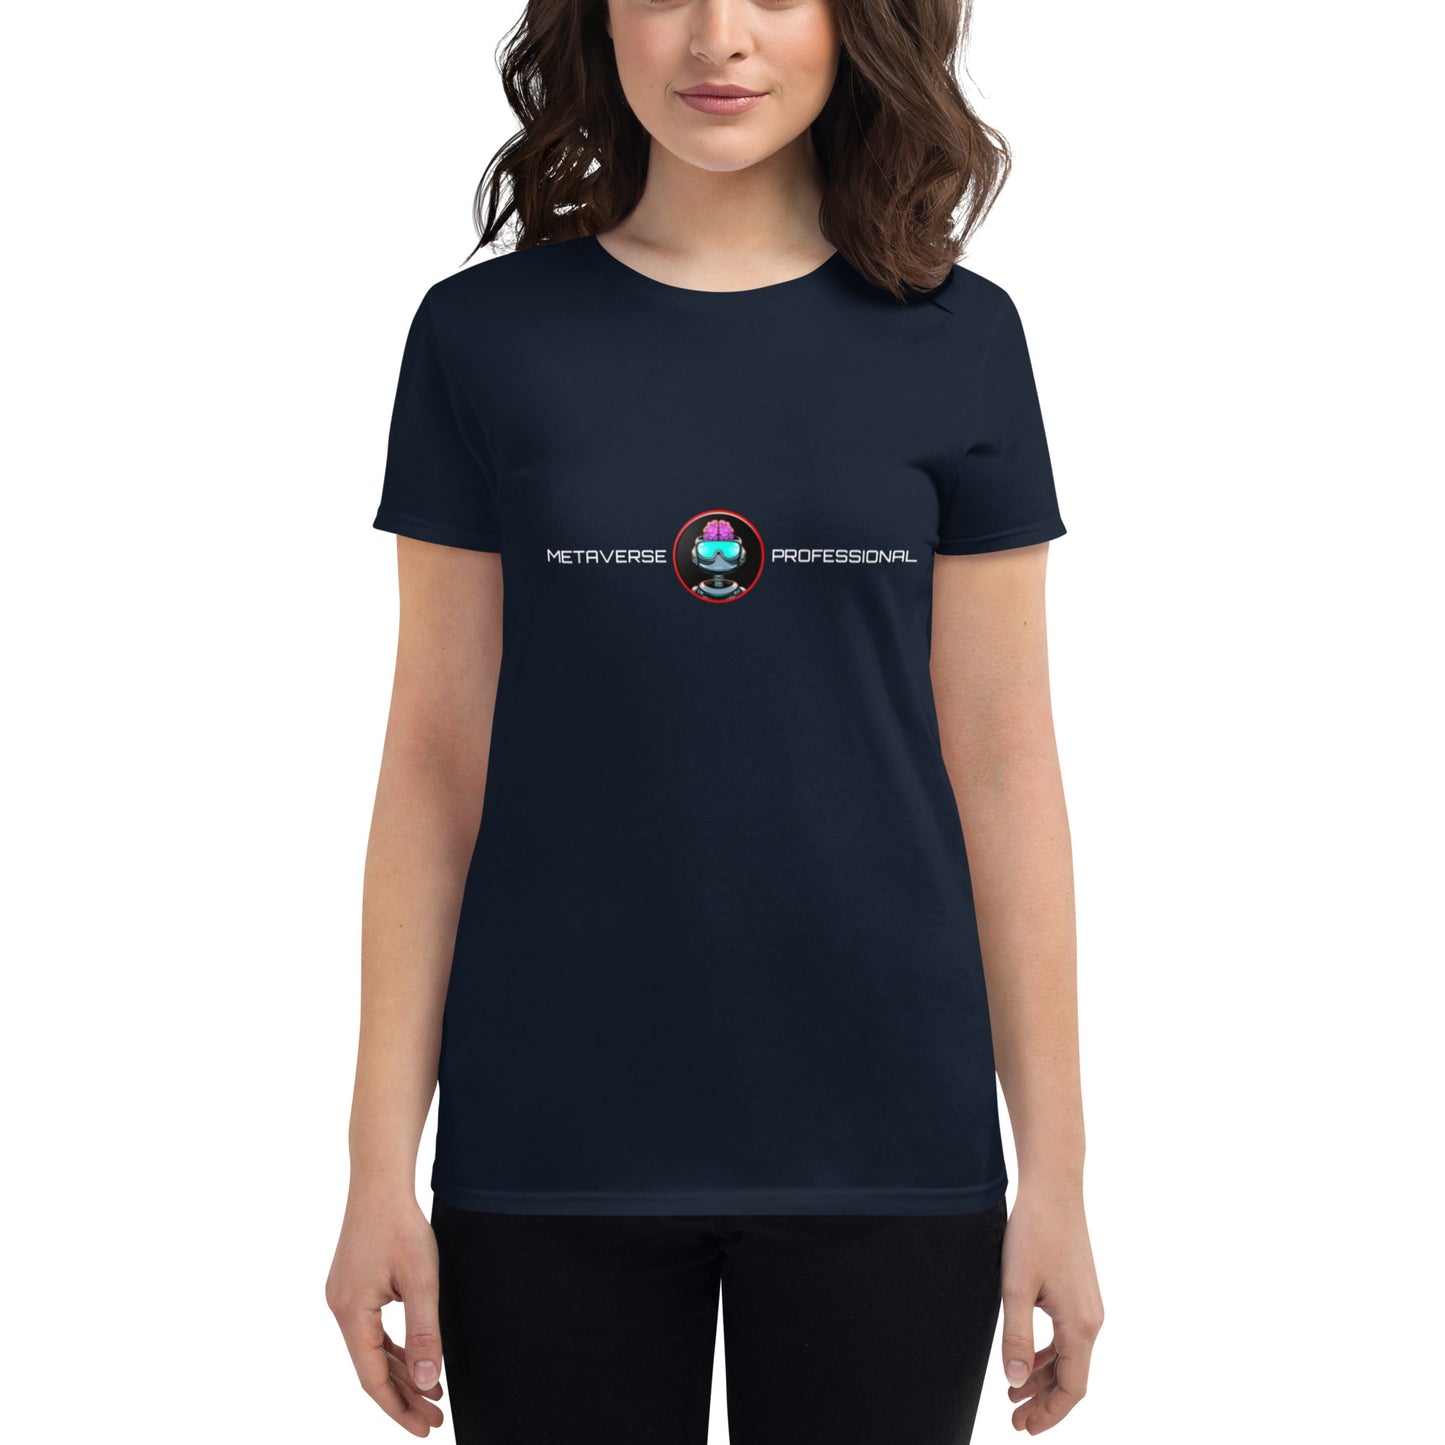 Metaverse Professional Virtual Explorer Tee - Women's short sleeve t-shirt